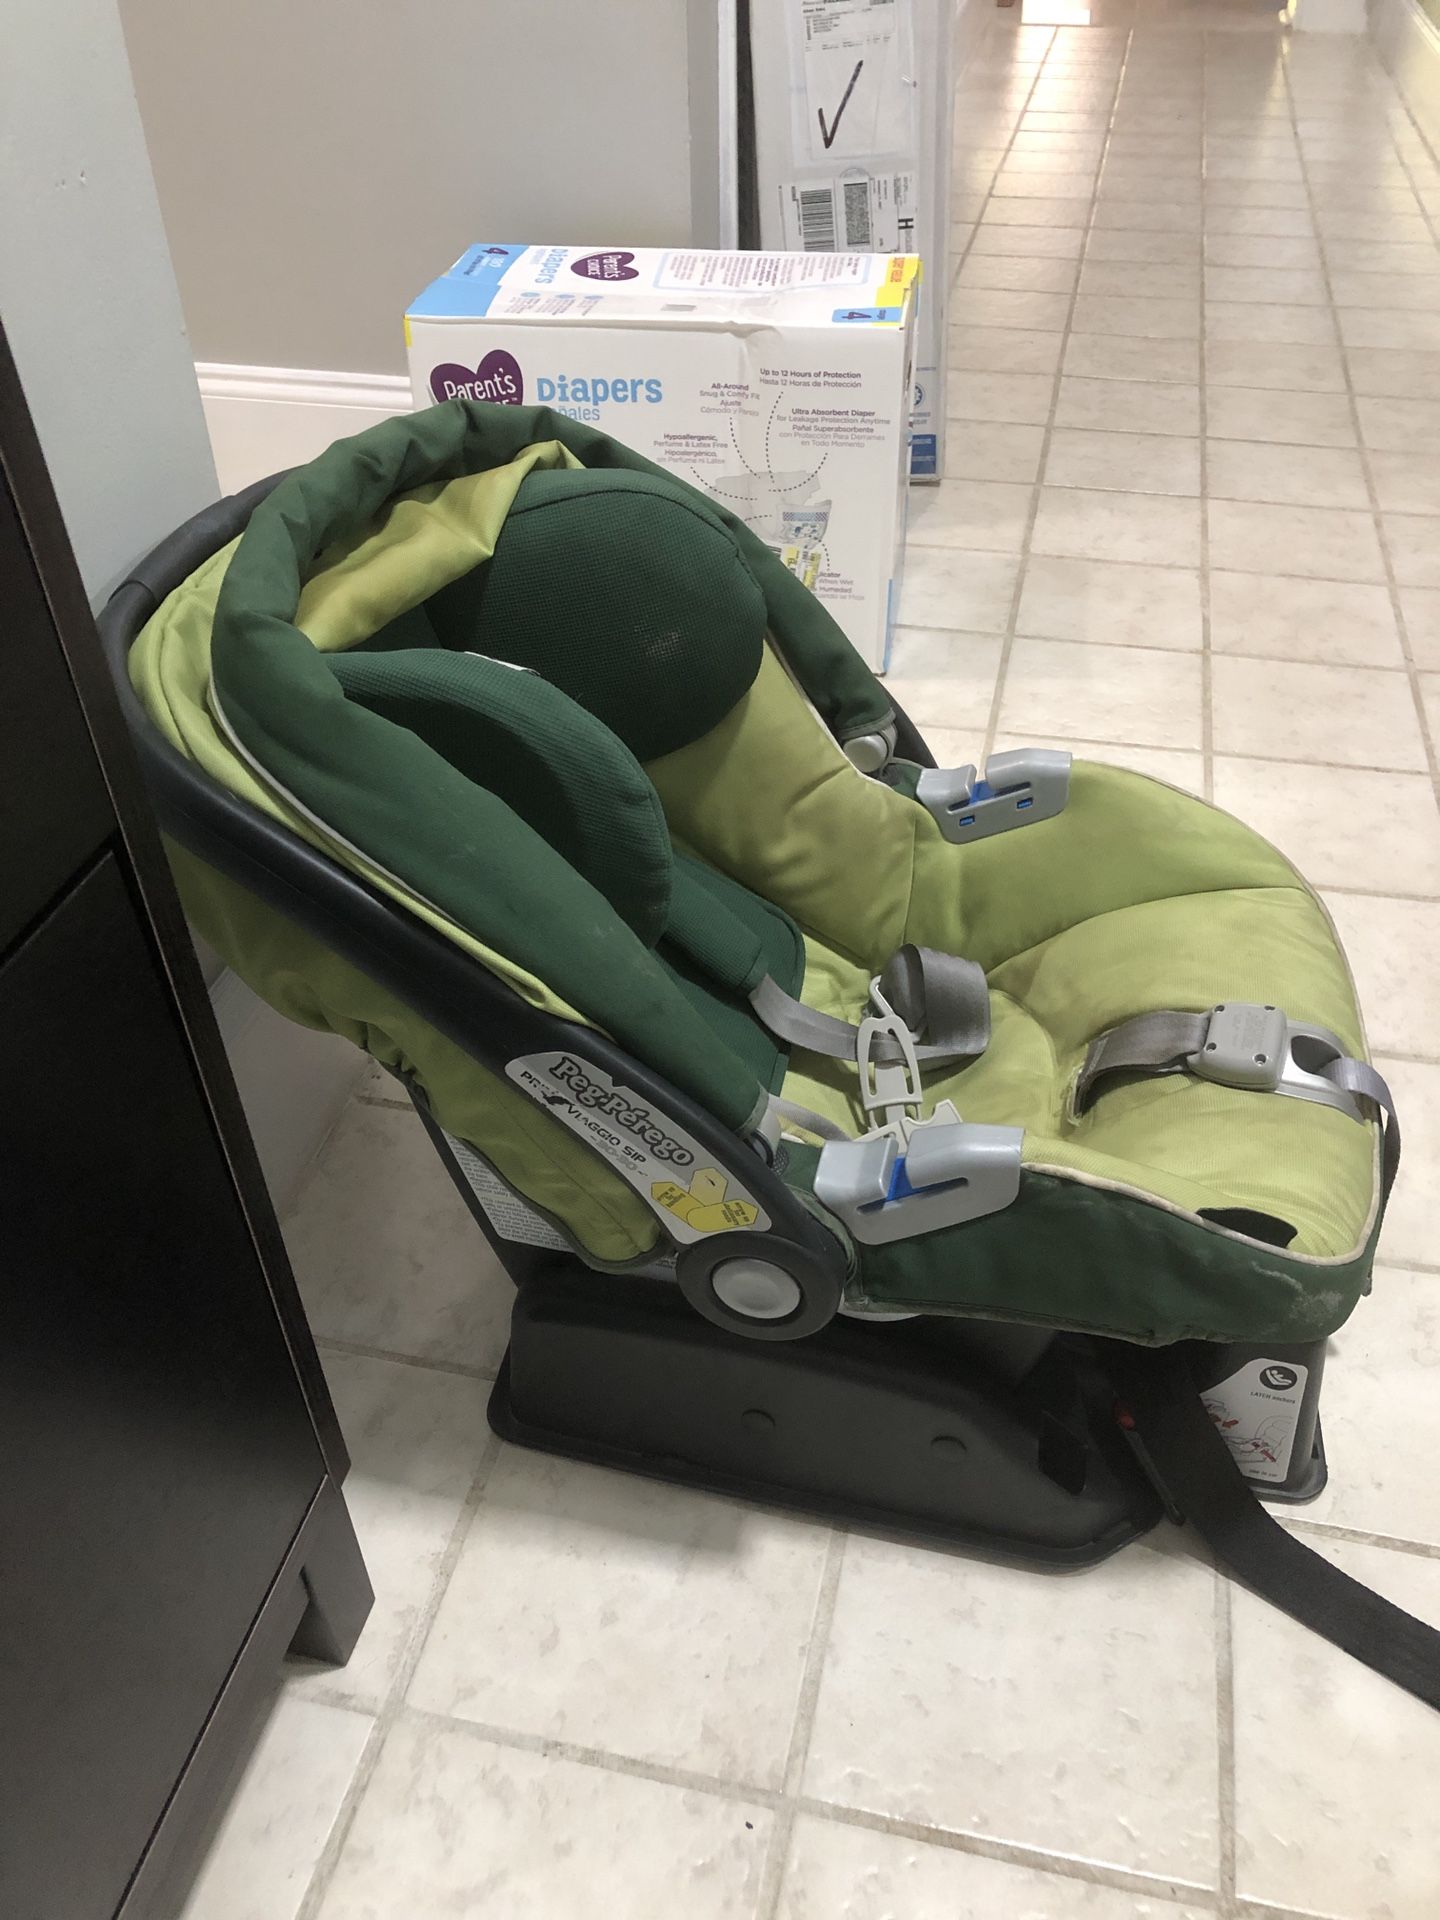 Car seat for baby/toddler